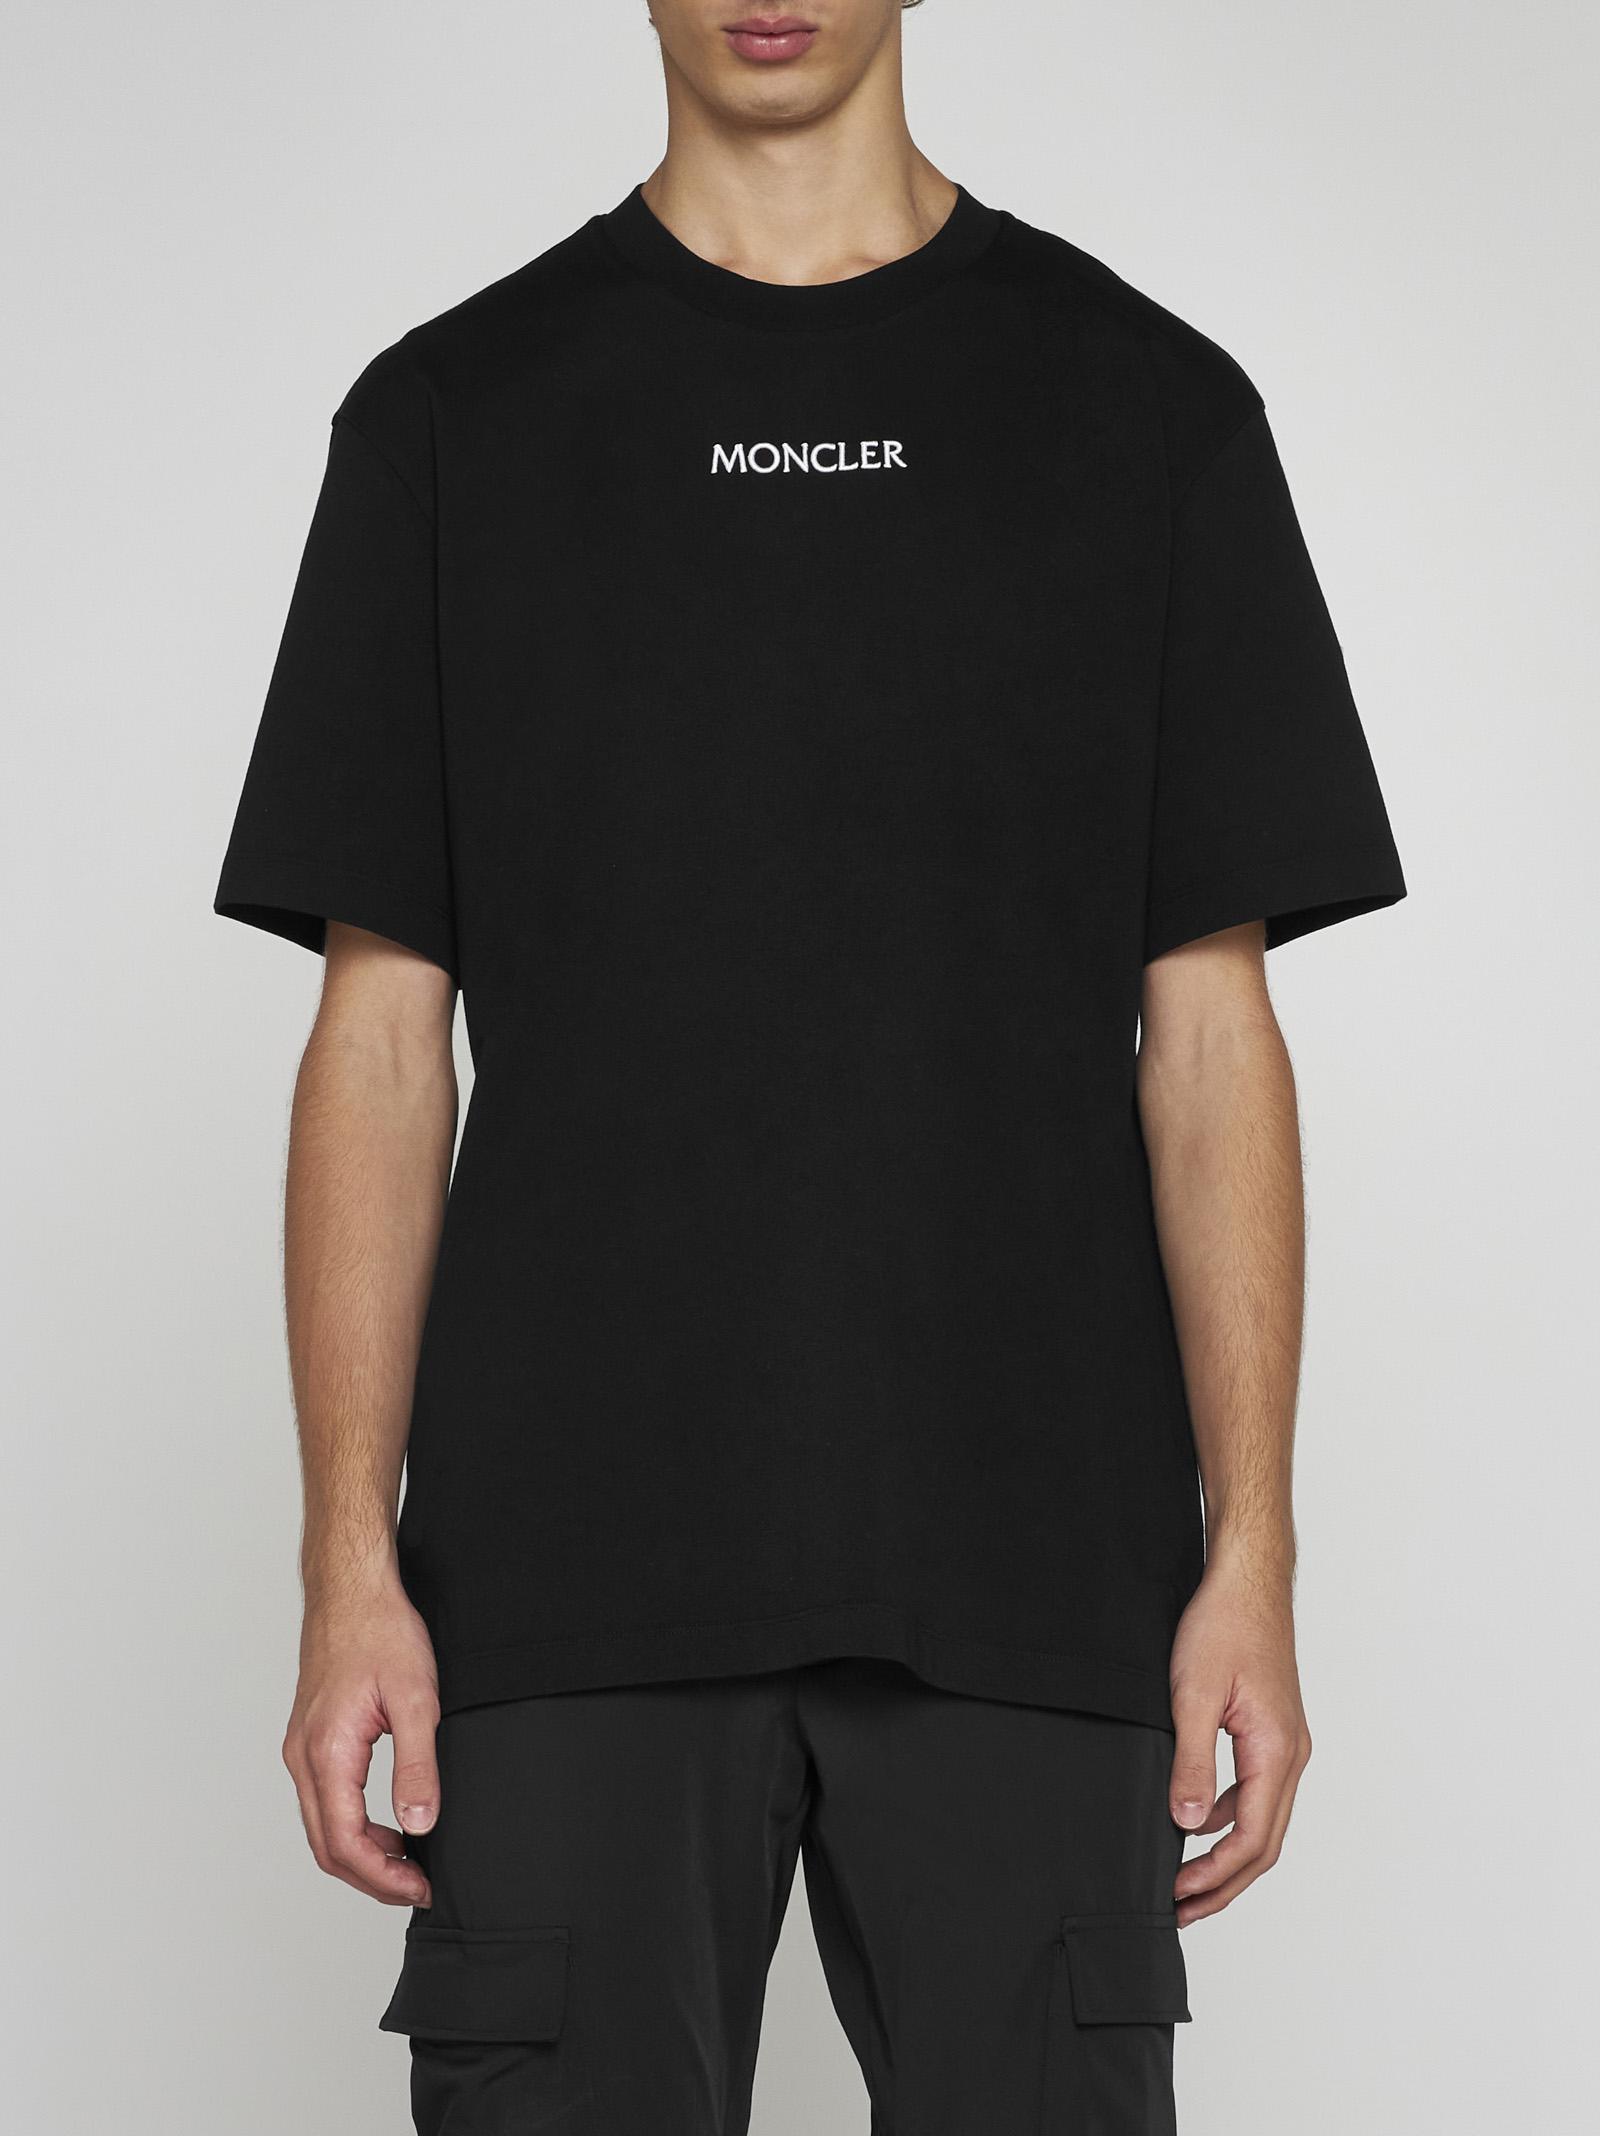 T-shirt Moncler Black size L International in Cotton - 21269471